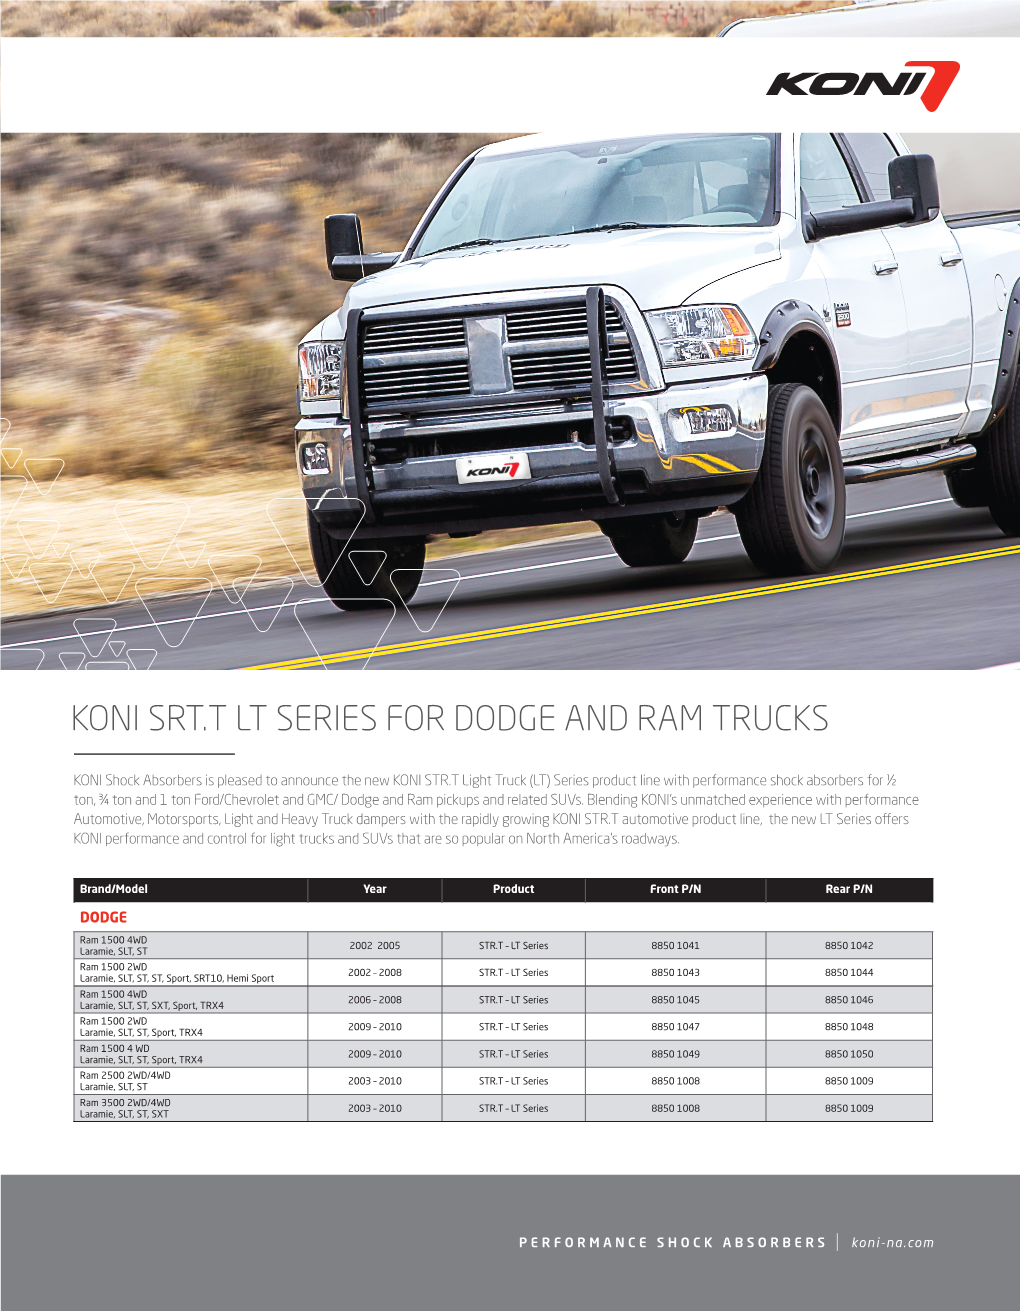 Koni Srt.T Lt Series for Dodge and Ram Trucks